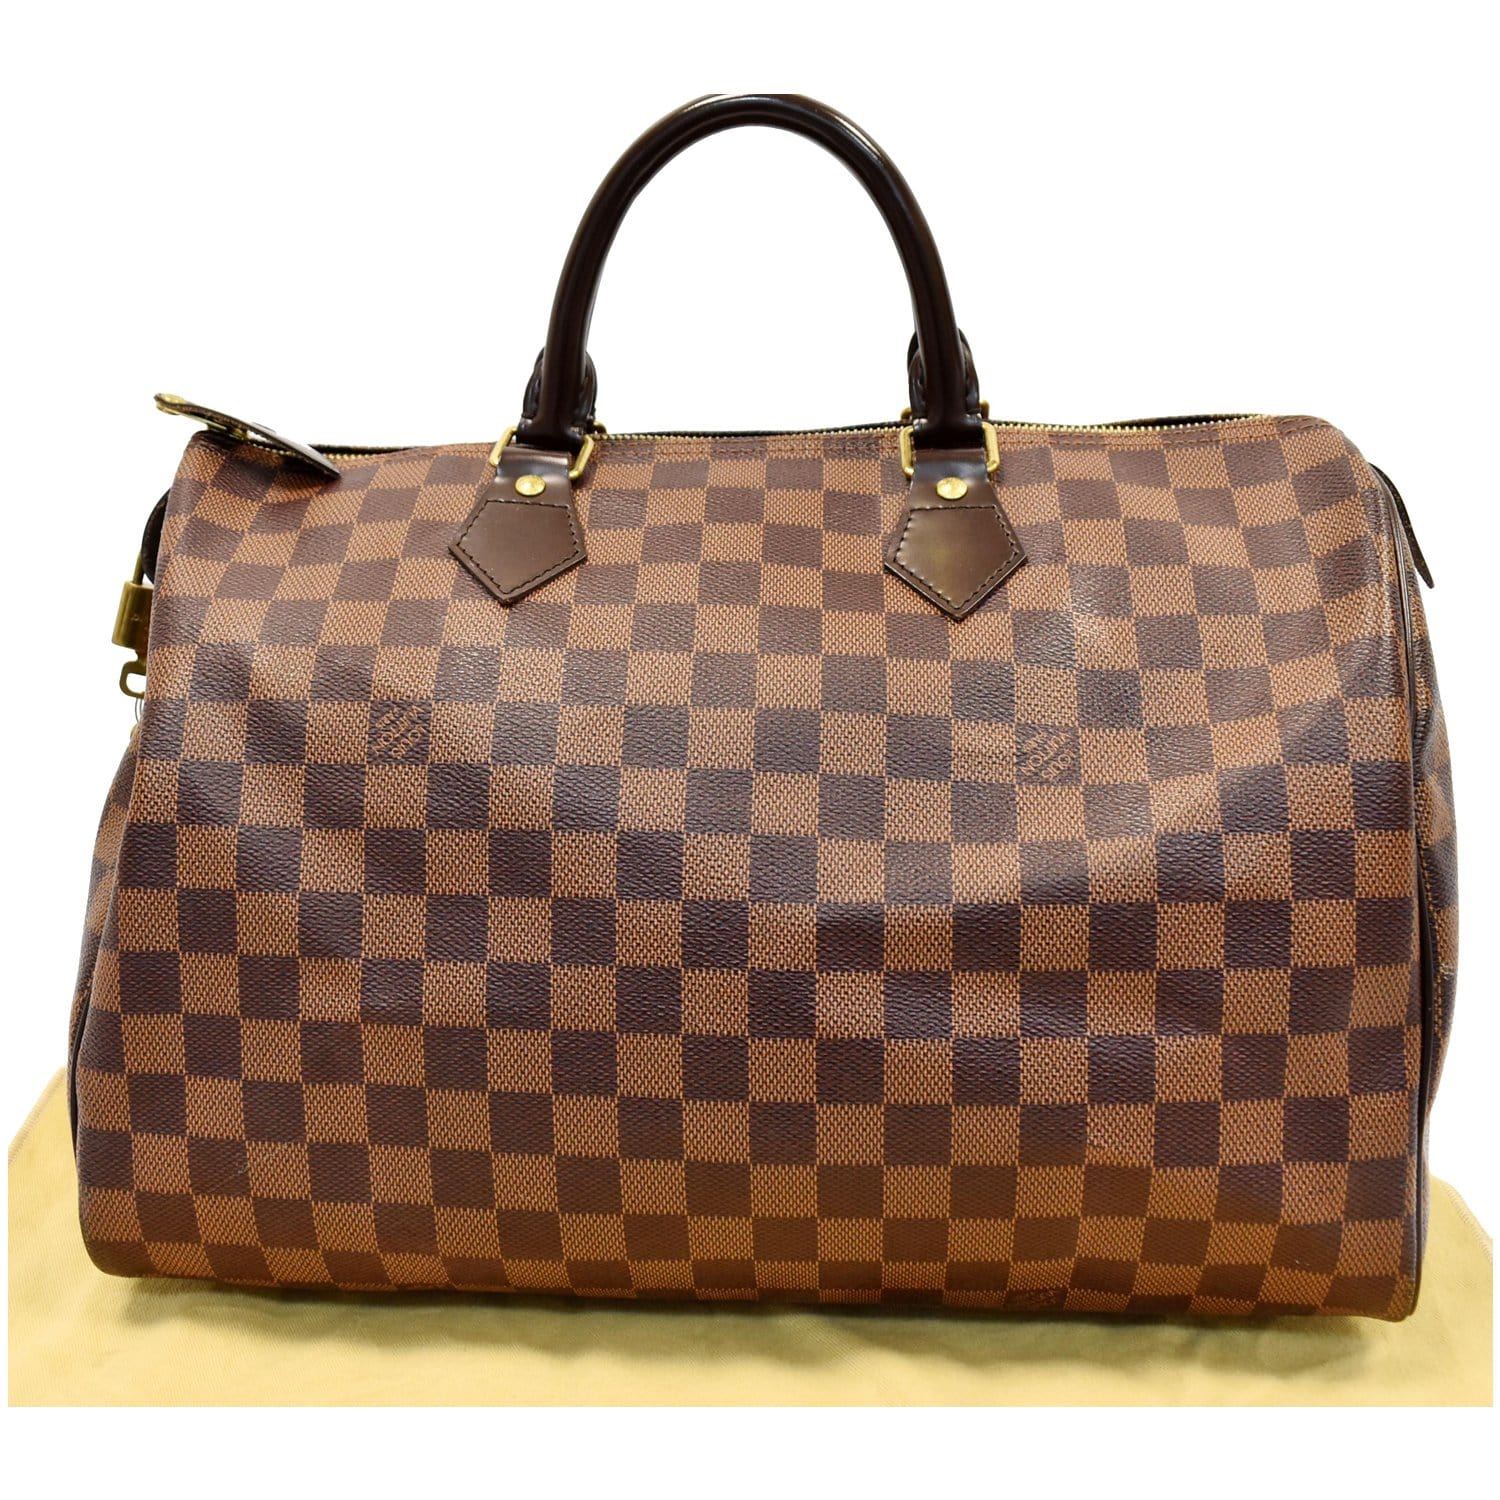 Bag: Louis Vuitton Speedy Damier Ebene 35